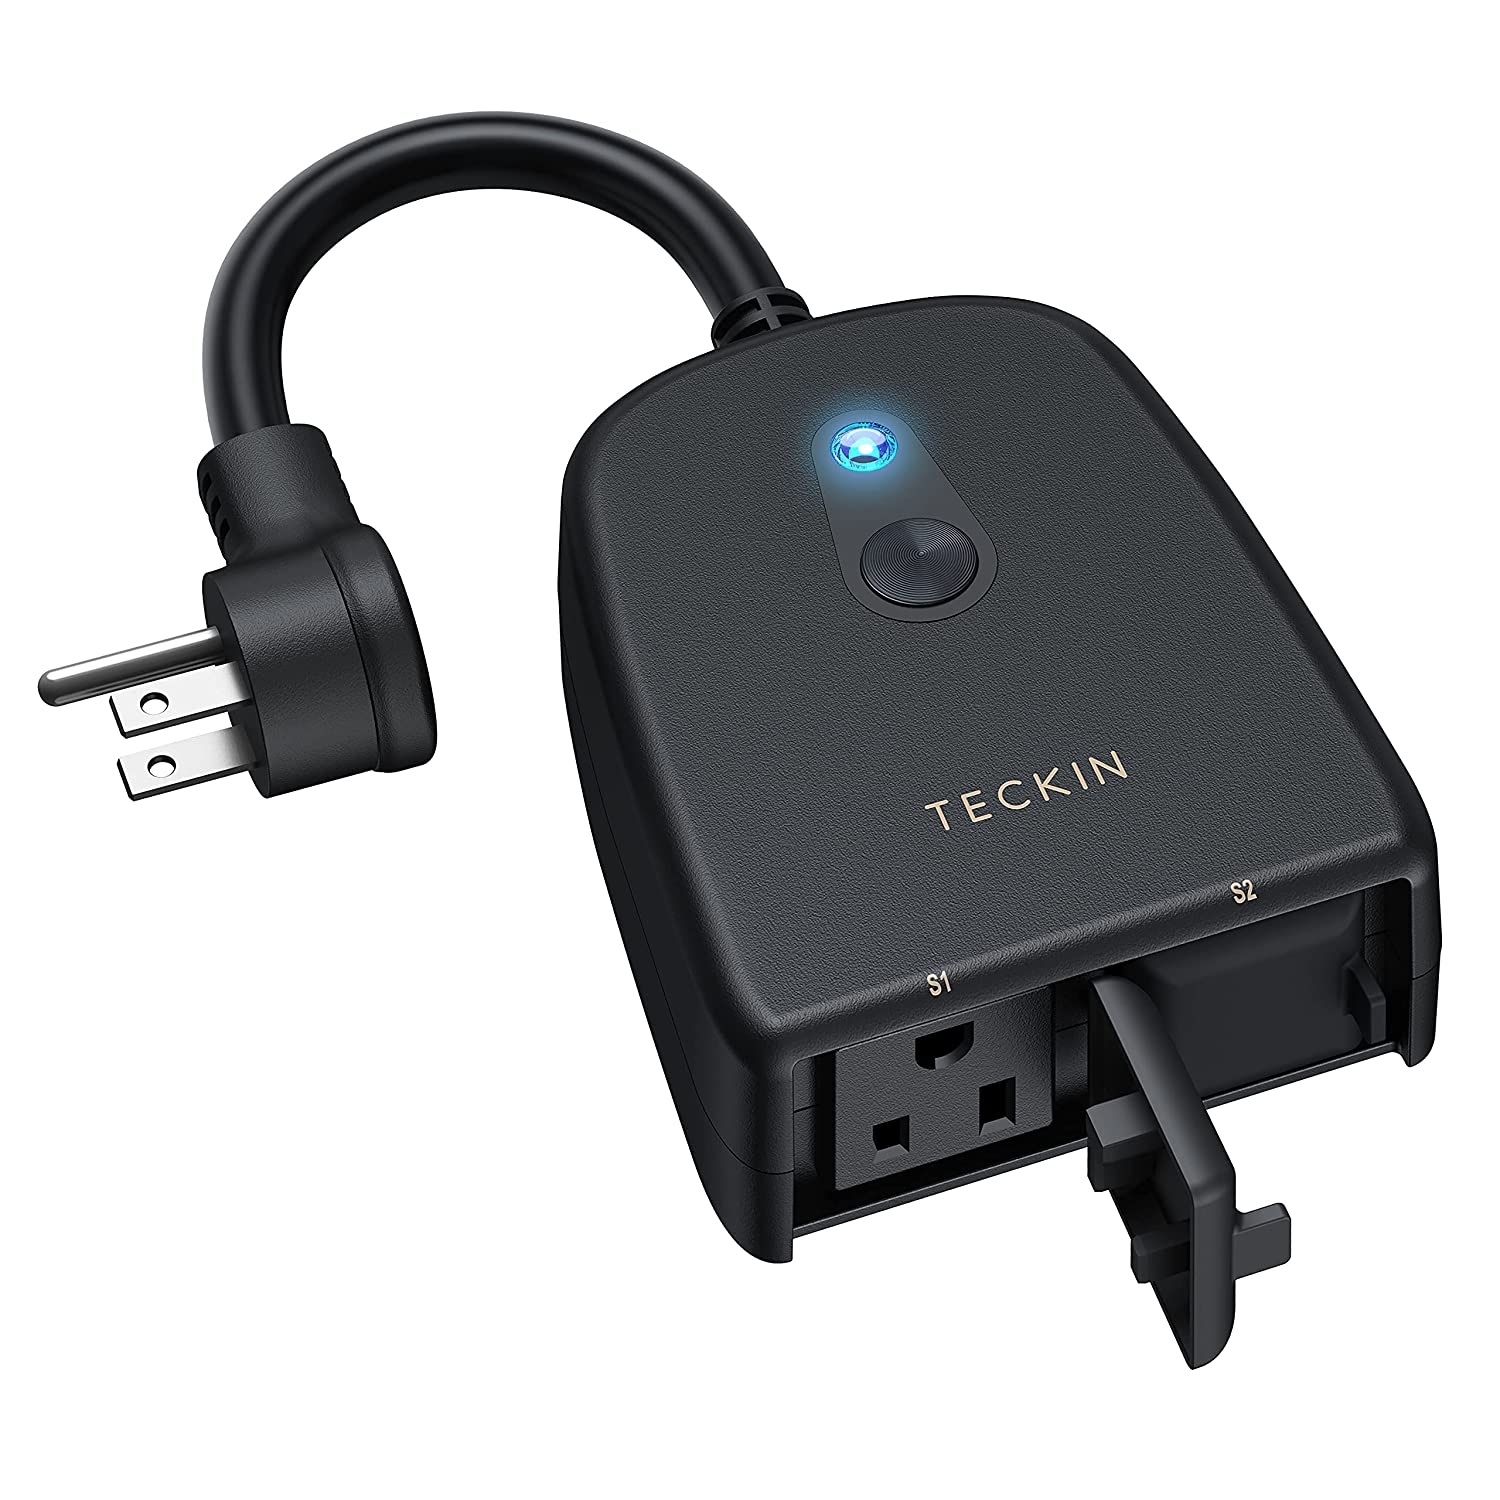 OFFICIAL] Teckin Smart Plug SP10